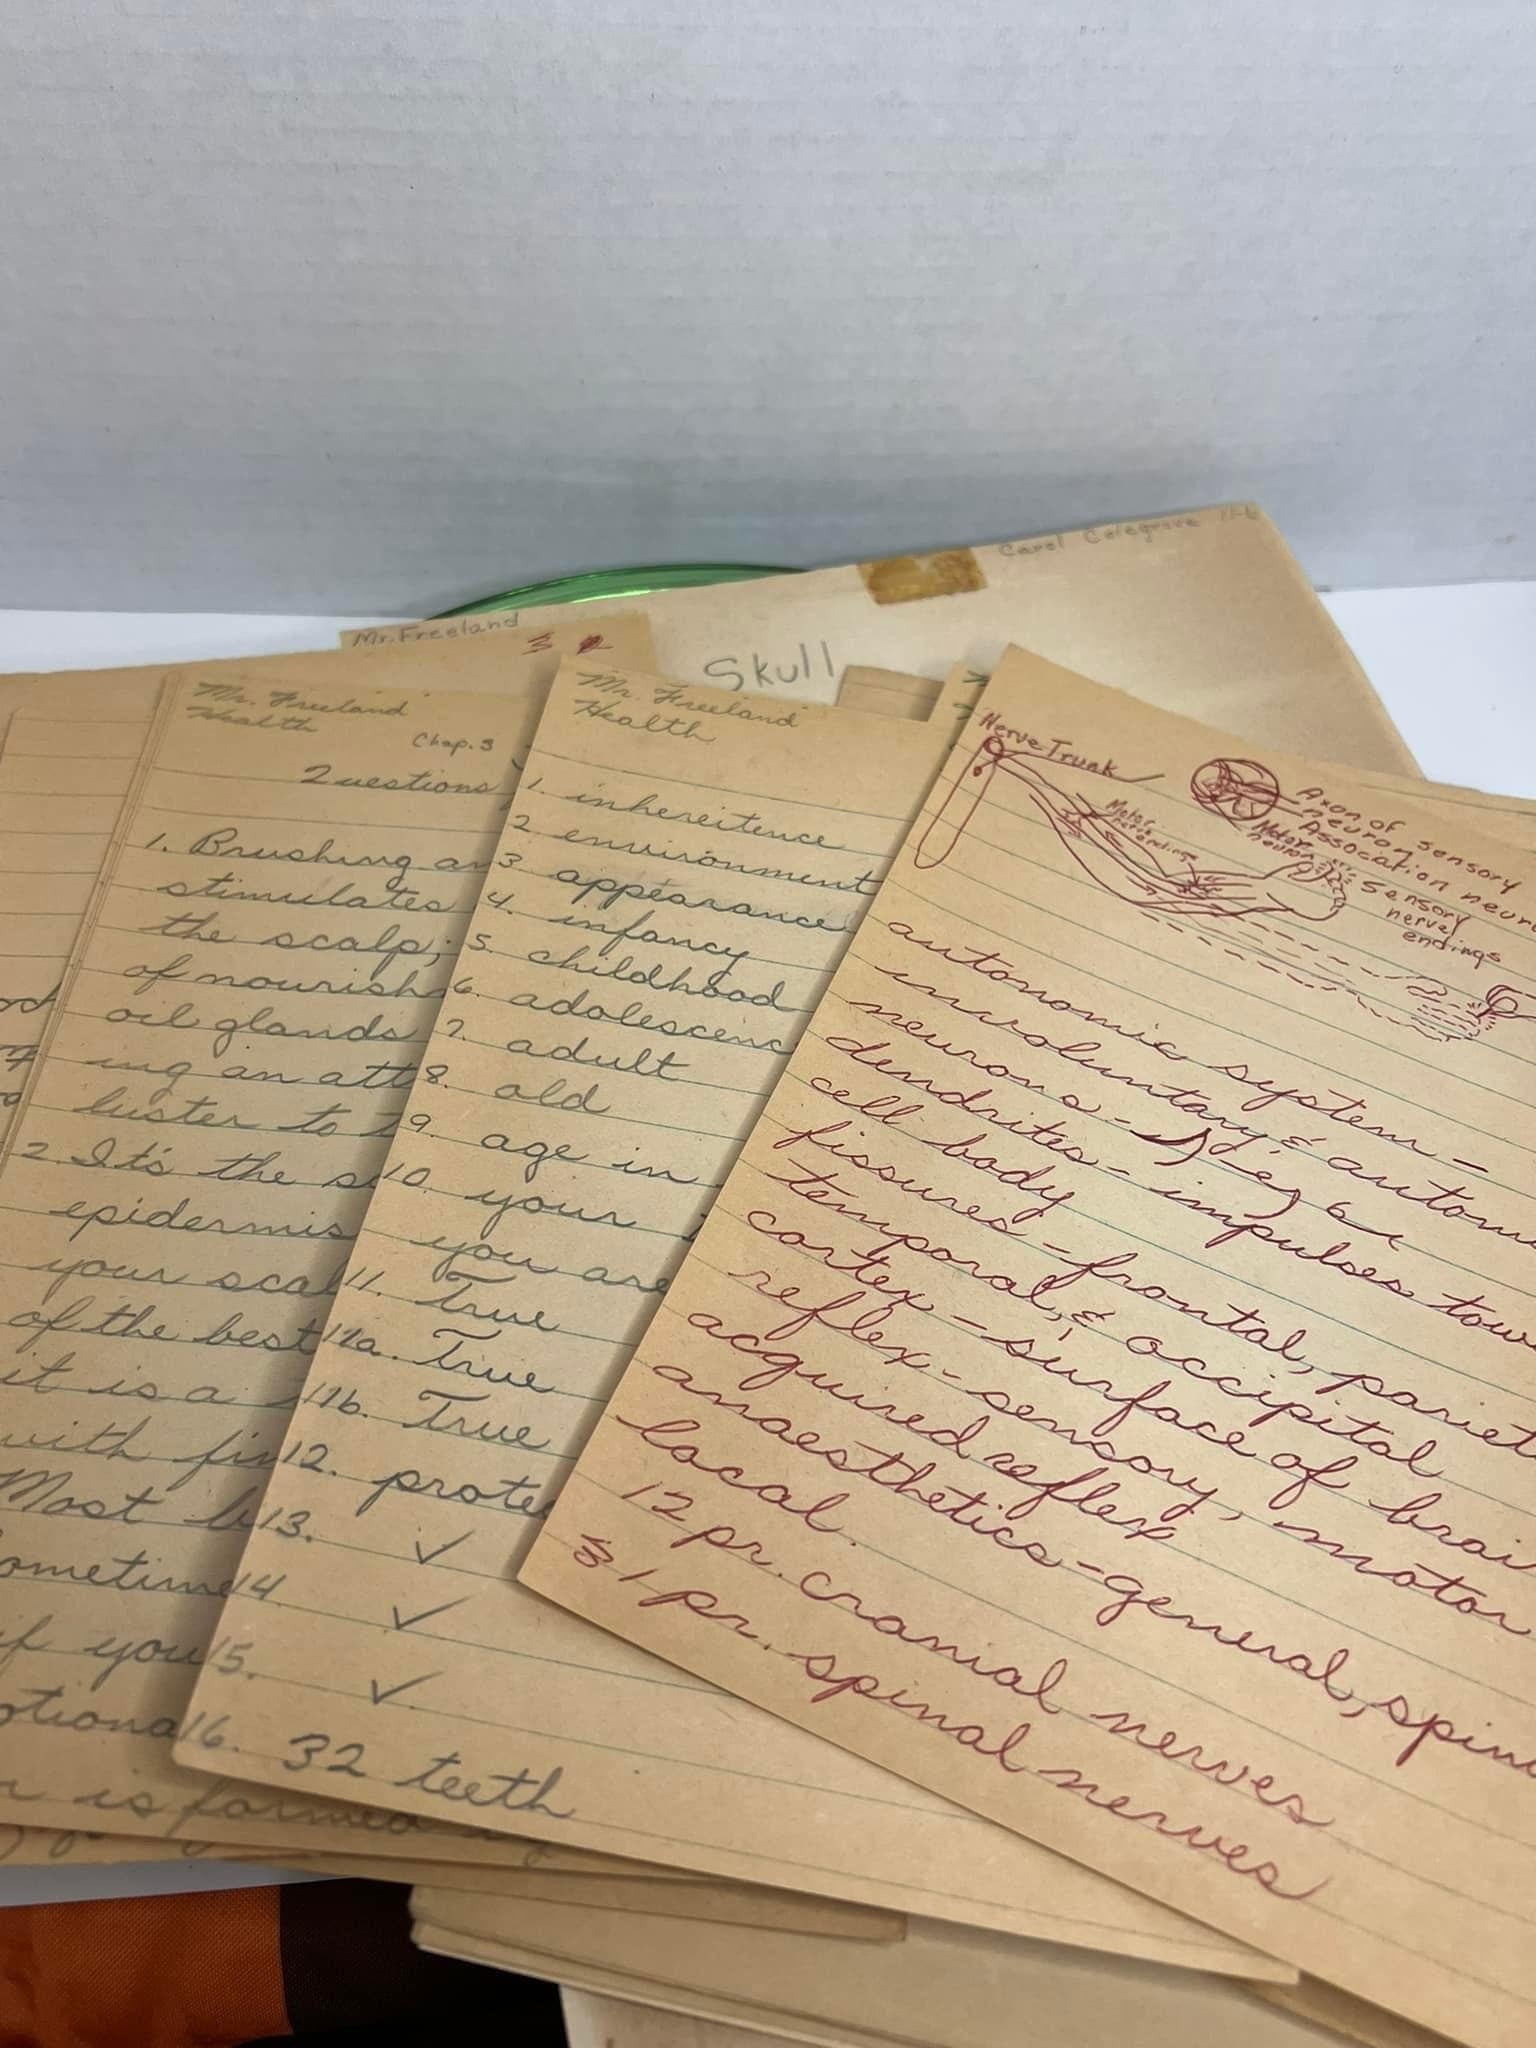 Vintage 1957 first aid book & handwritten notes